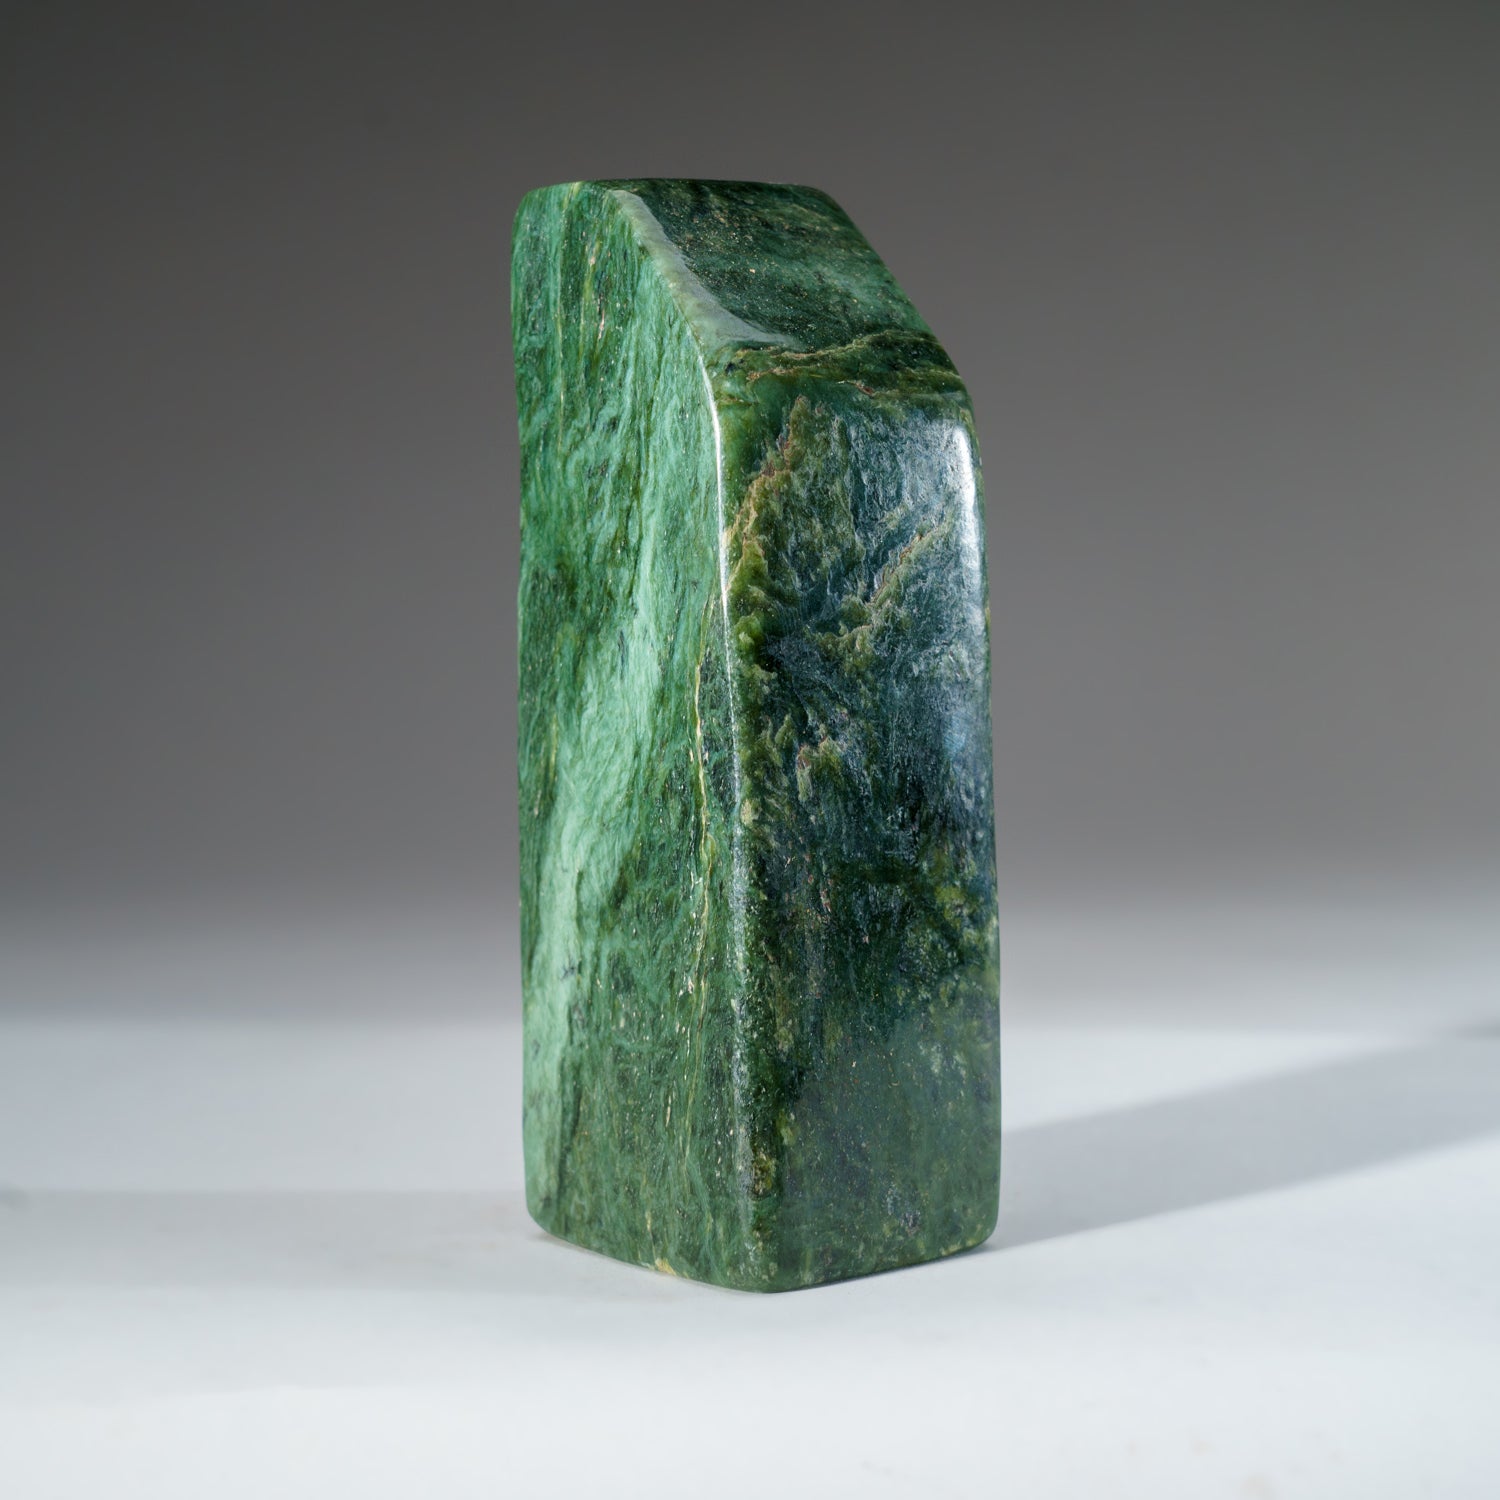 Polished Nephrite Jade Freeform from Pakistan (2.3 lbs)